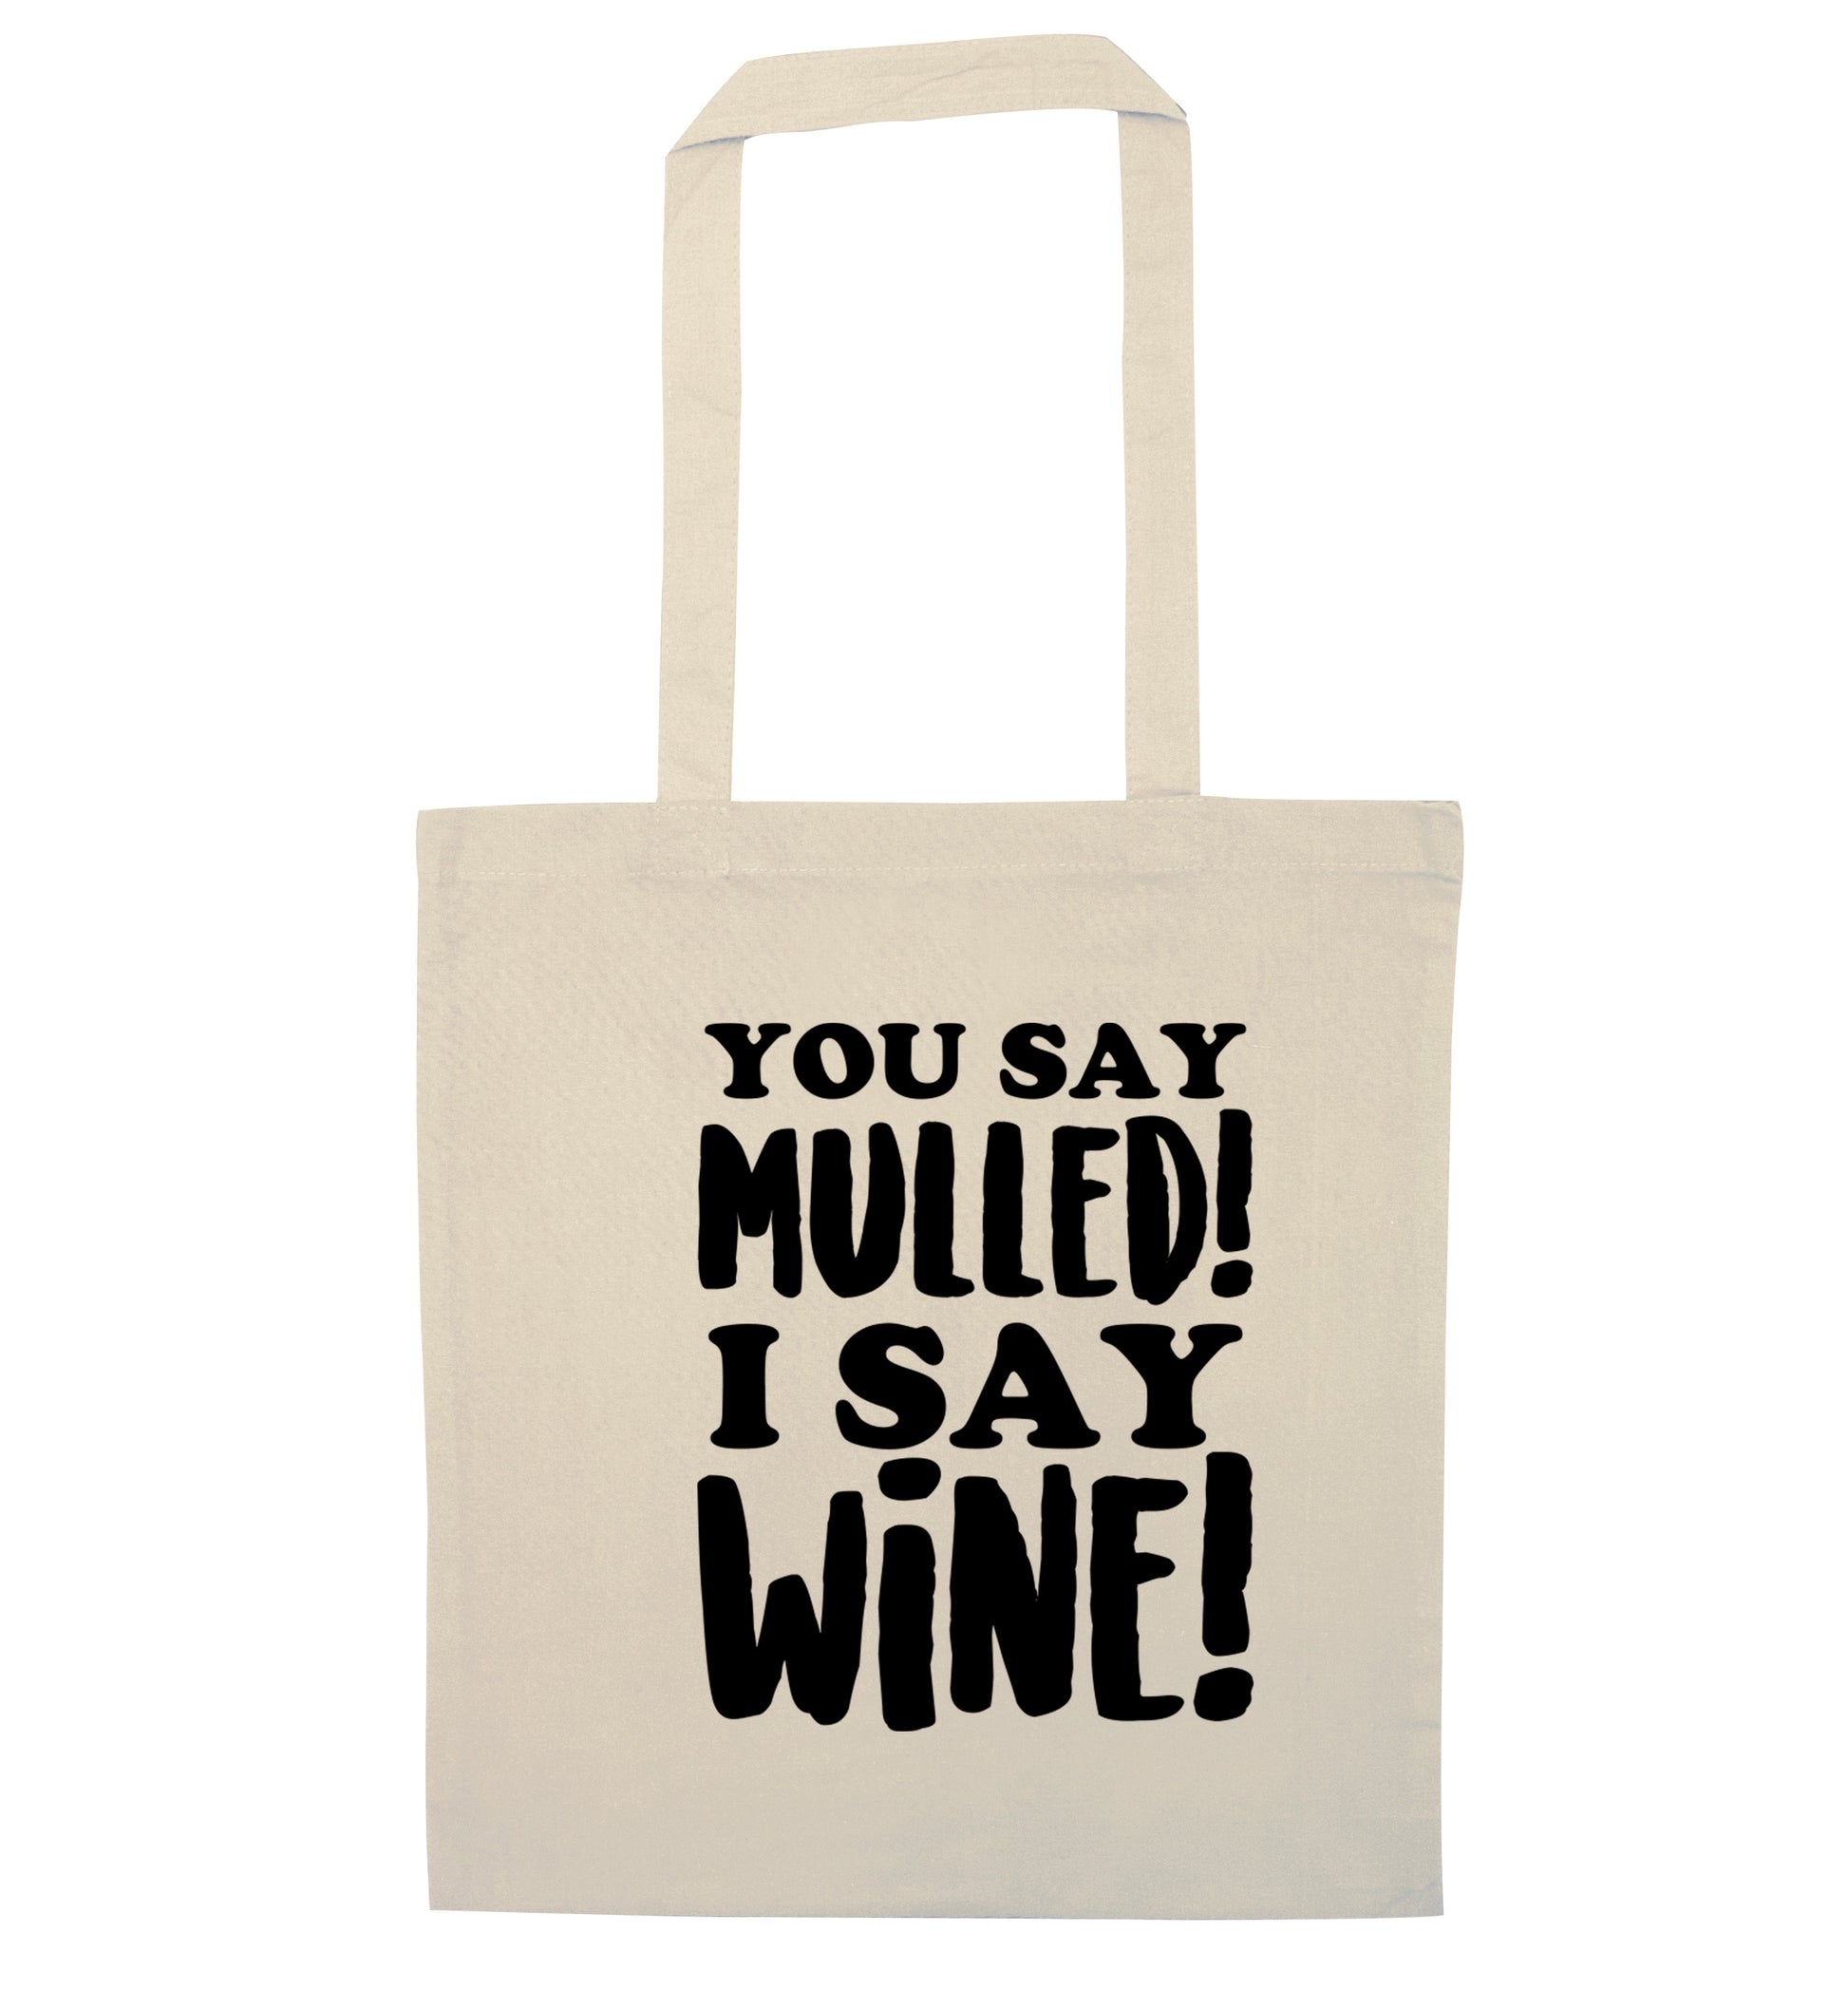 You say mulled I say wine! natural tote bag